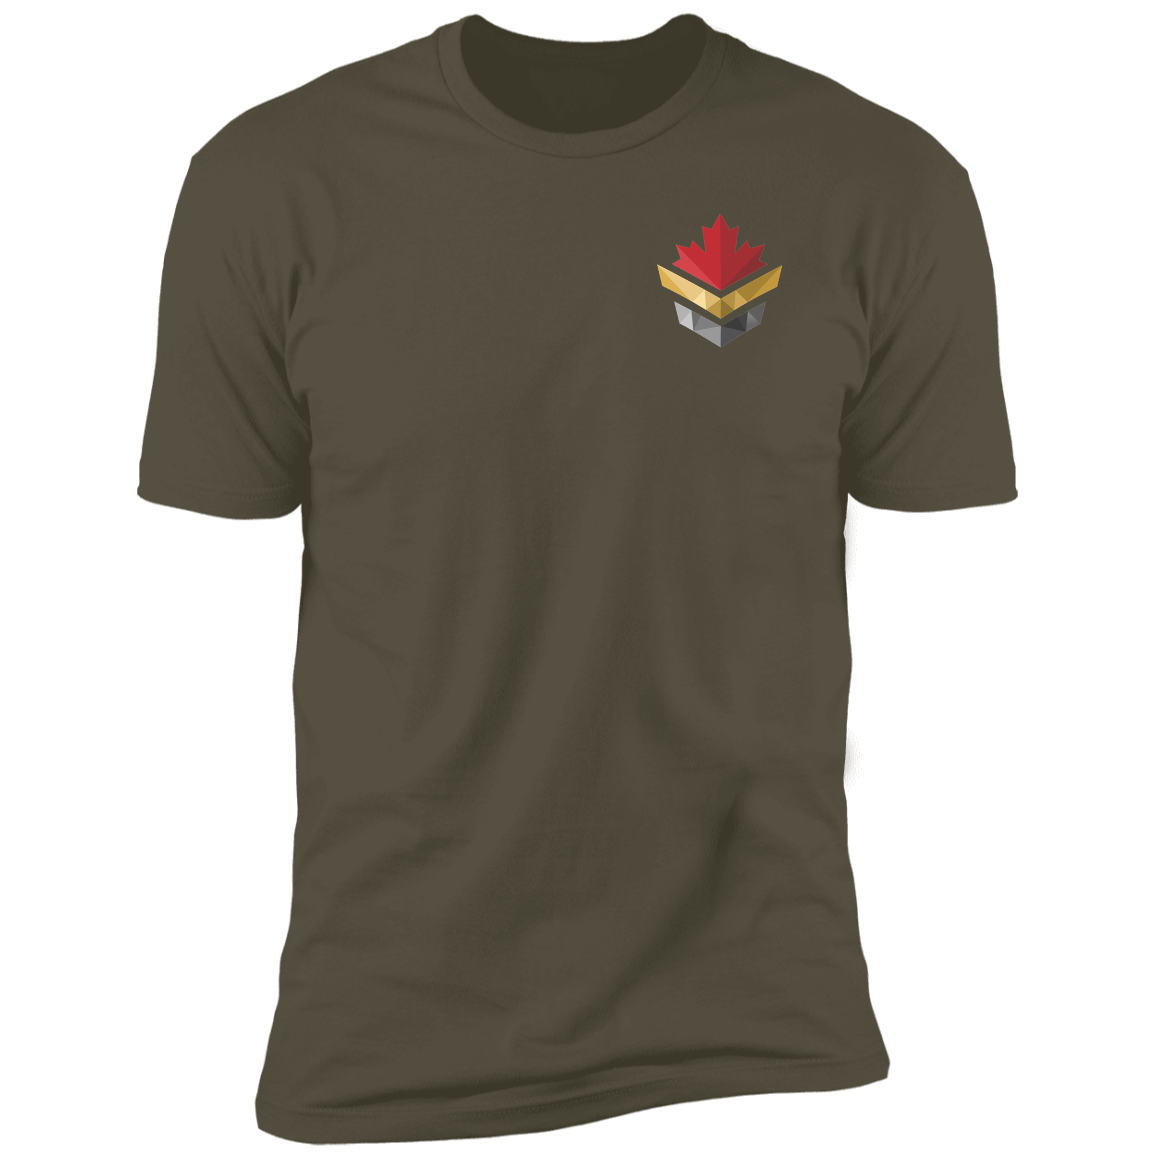 PRIDE IN SERVICE Premium Short Sleeve T-Shirt (Emblem Only)